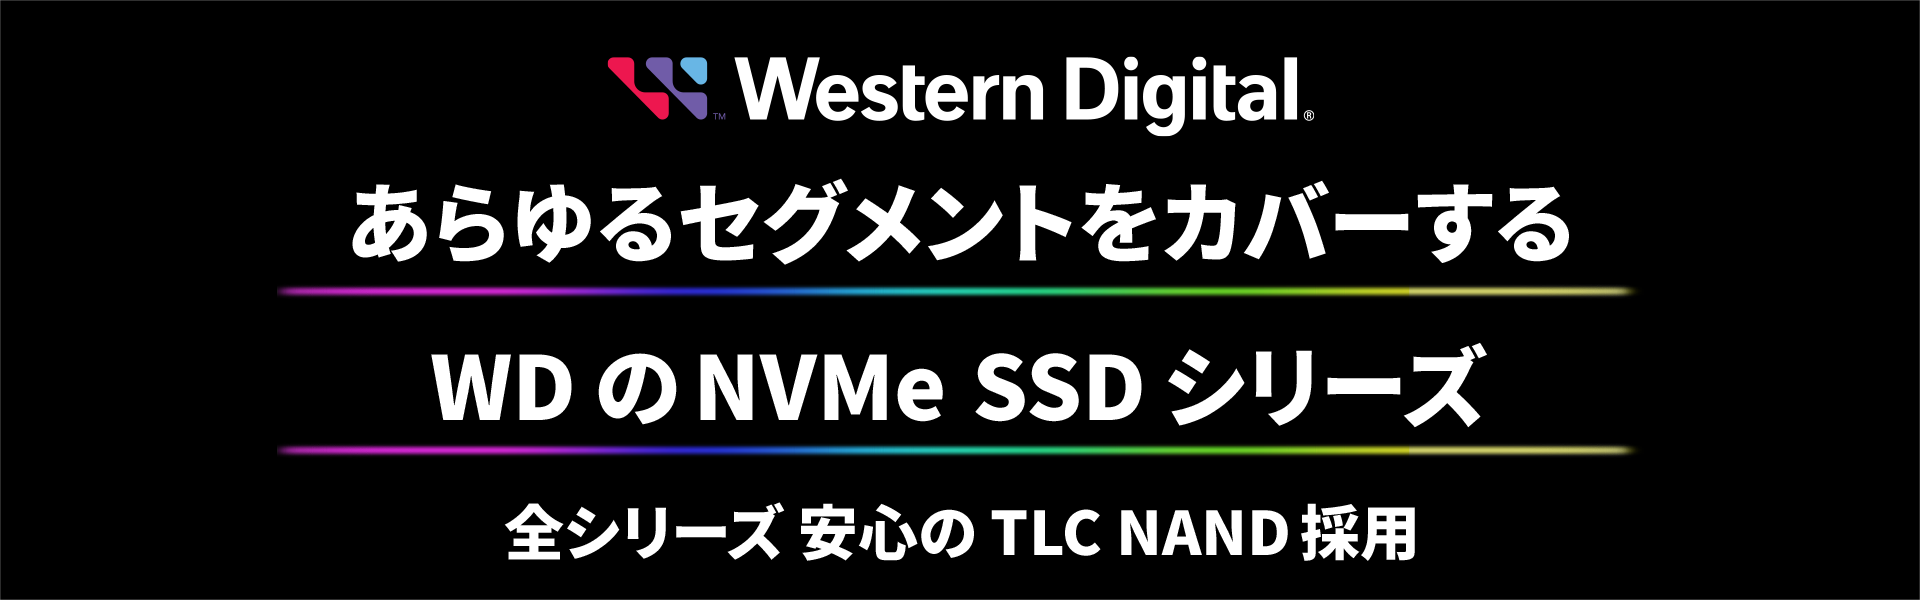 WesternDigital あらゆるセグメントをカバーするWDのNVME SSDシリーズ 全シリーズ安心のTLC NAND採用